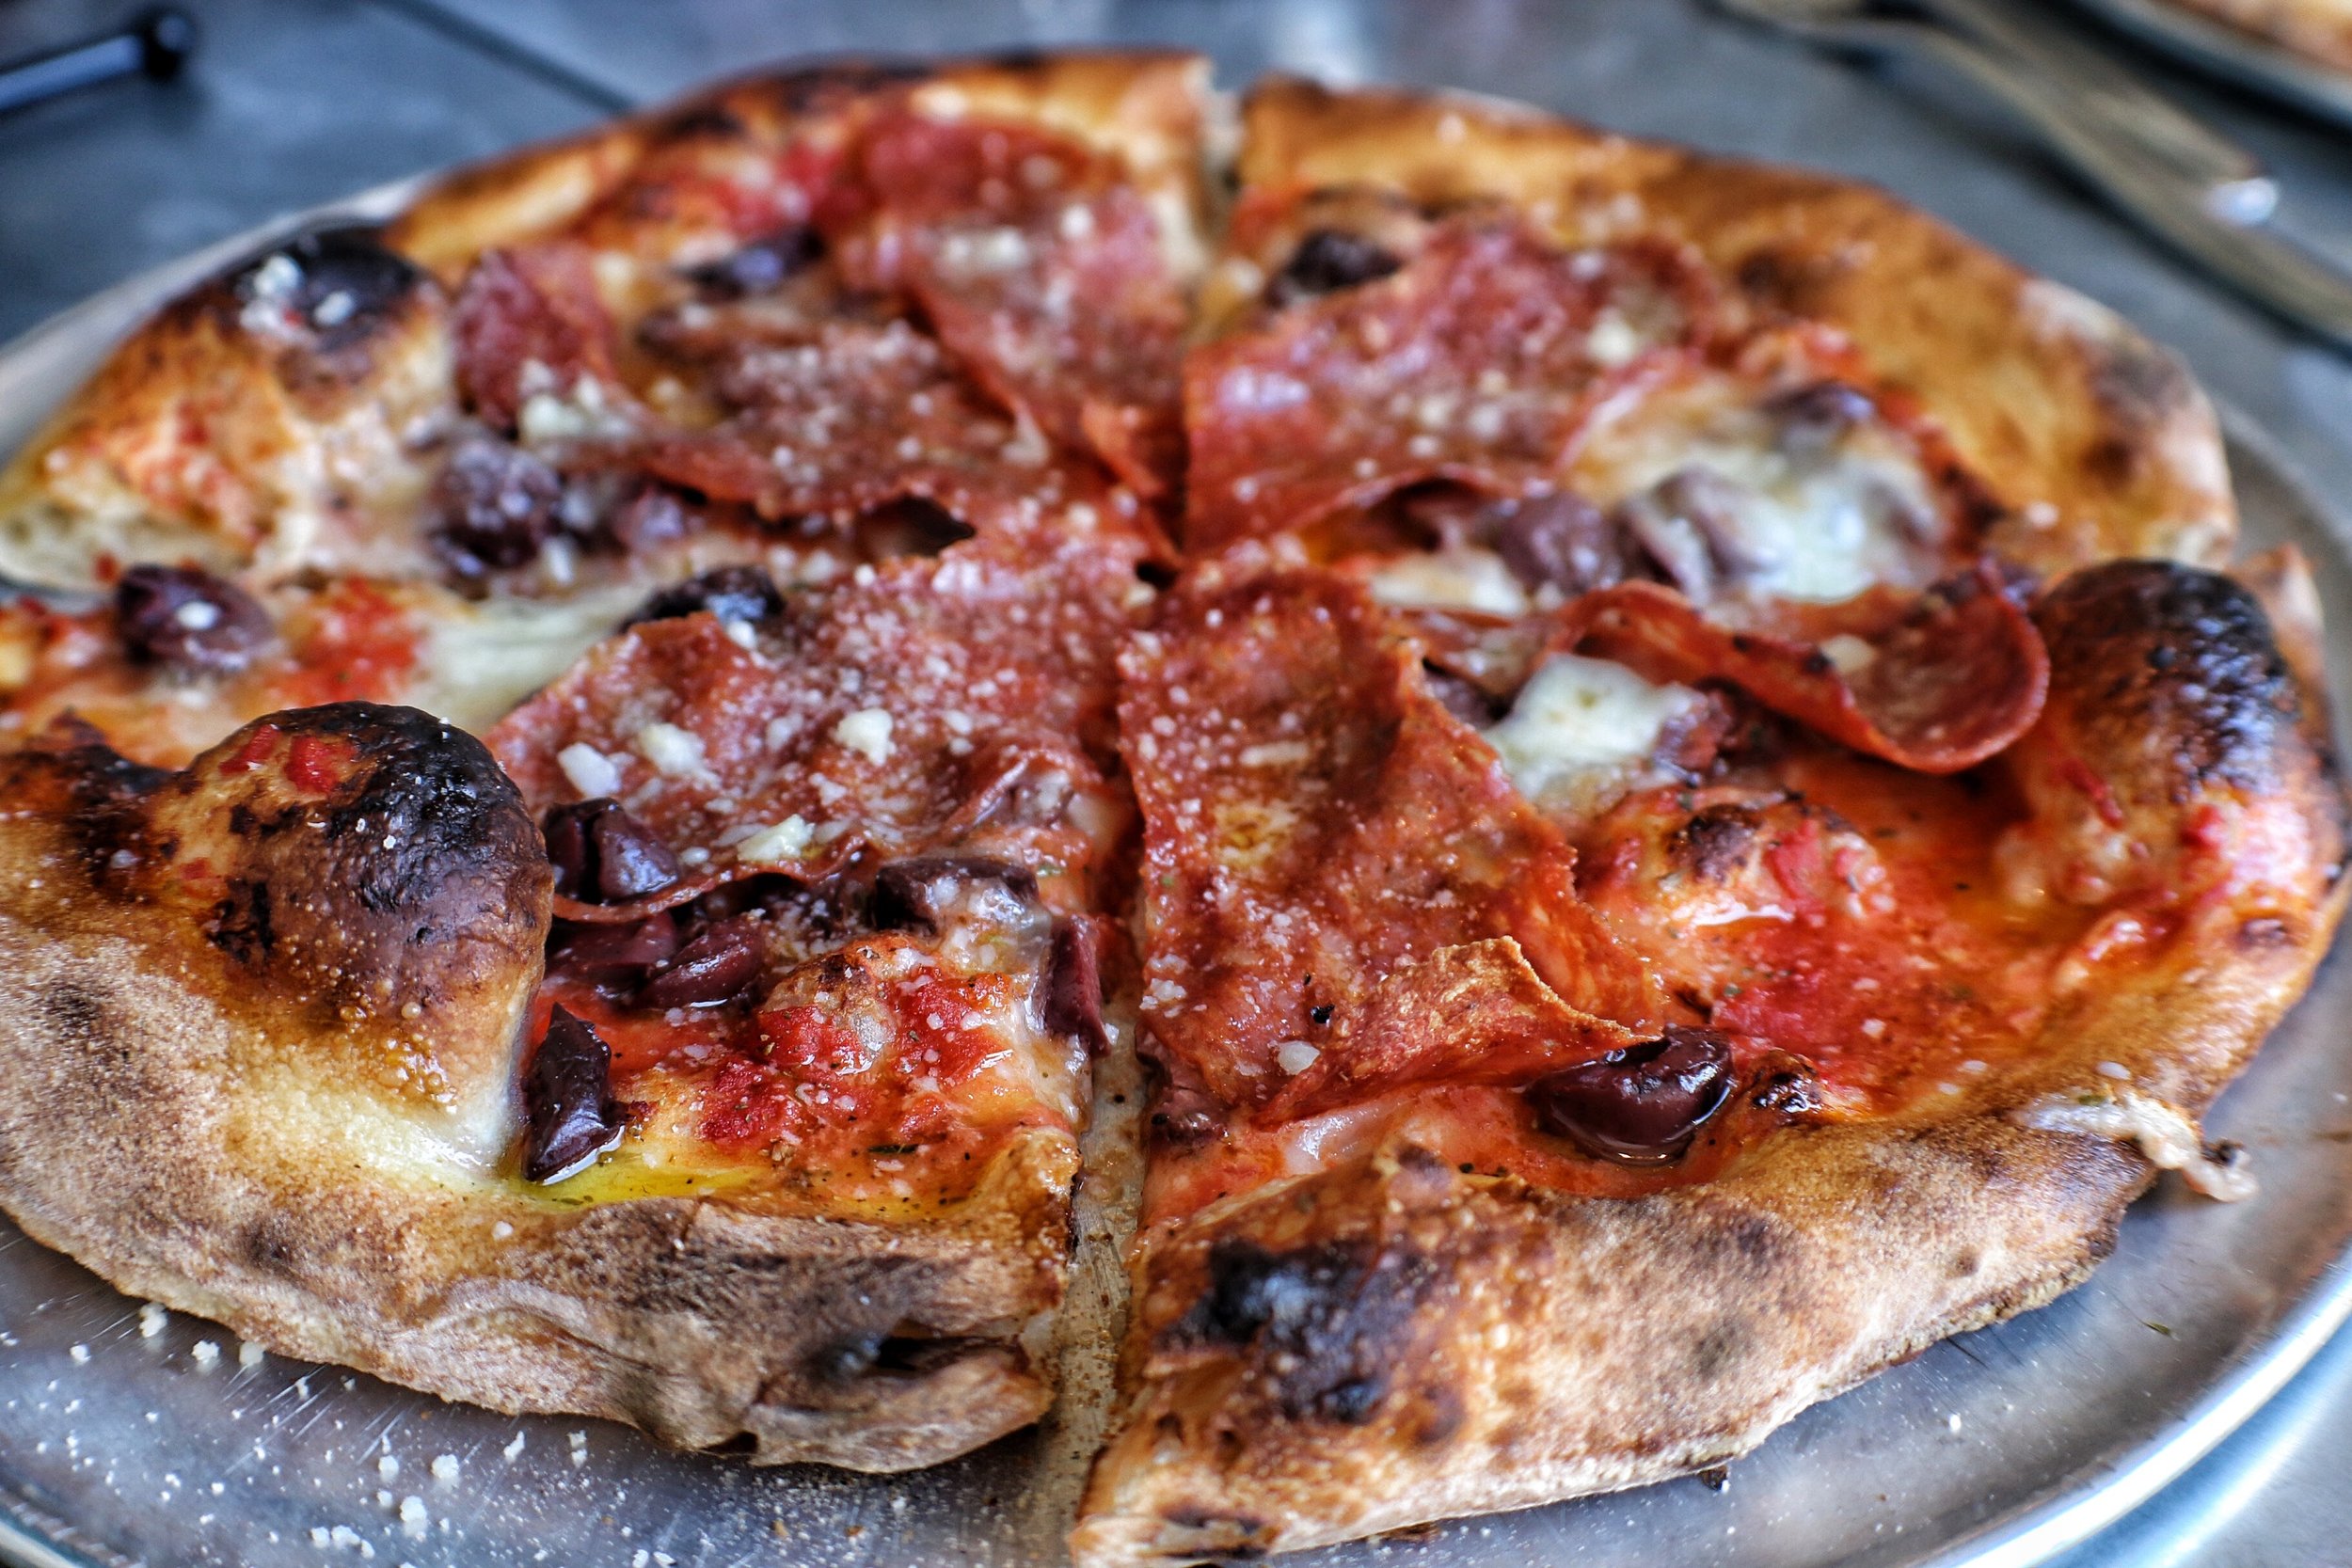  pizza- tomato, spicy salami, olives, bualo mozzarella 